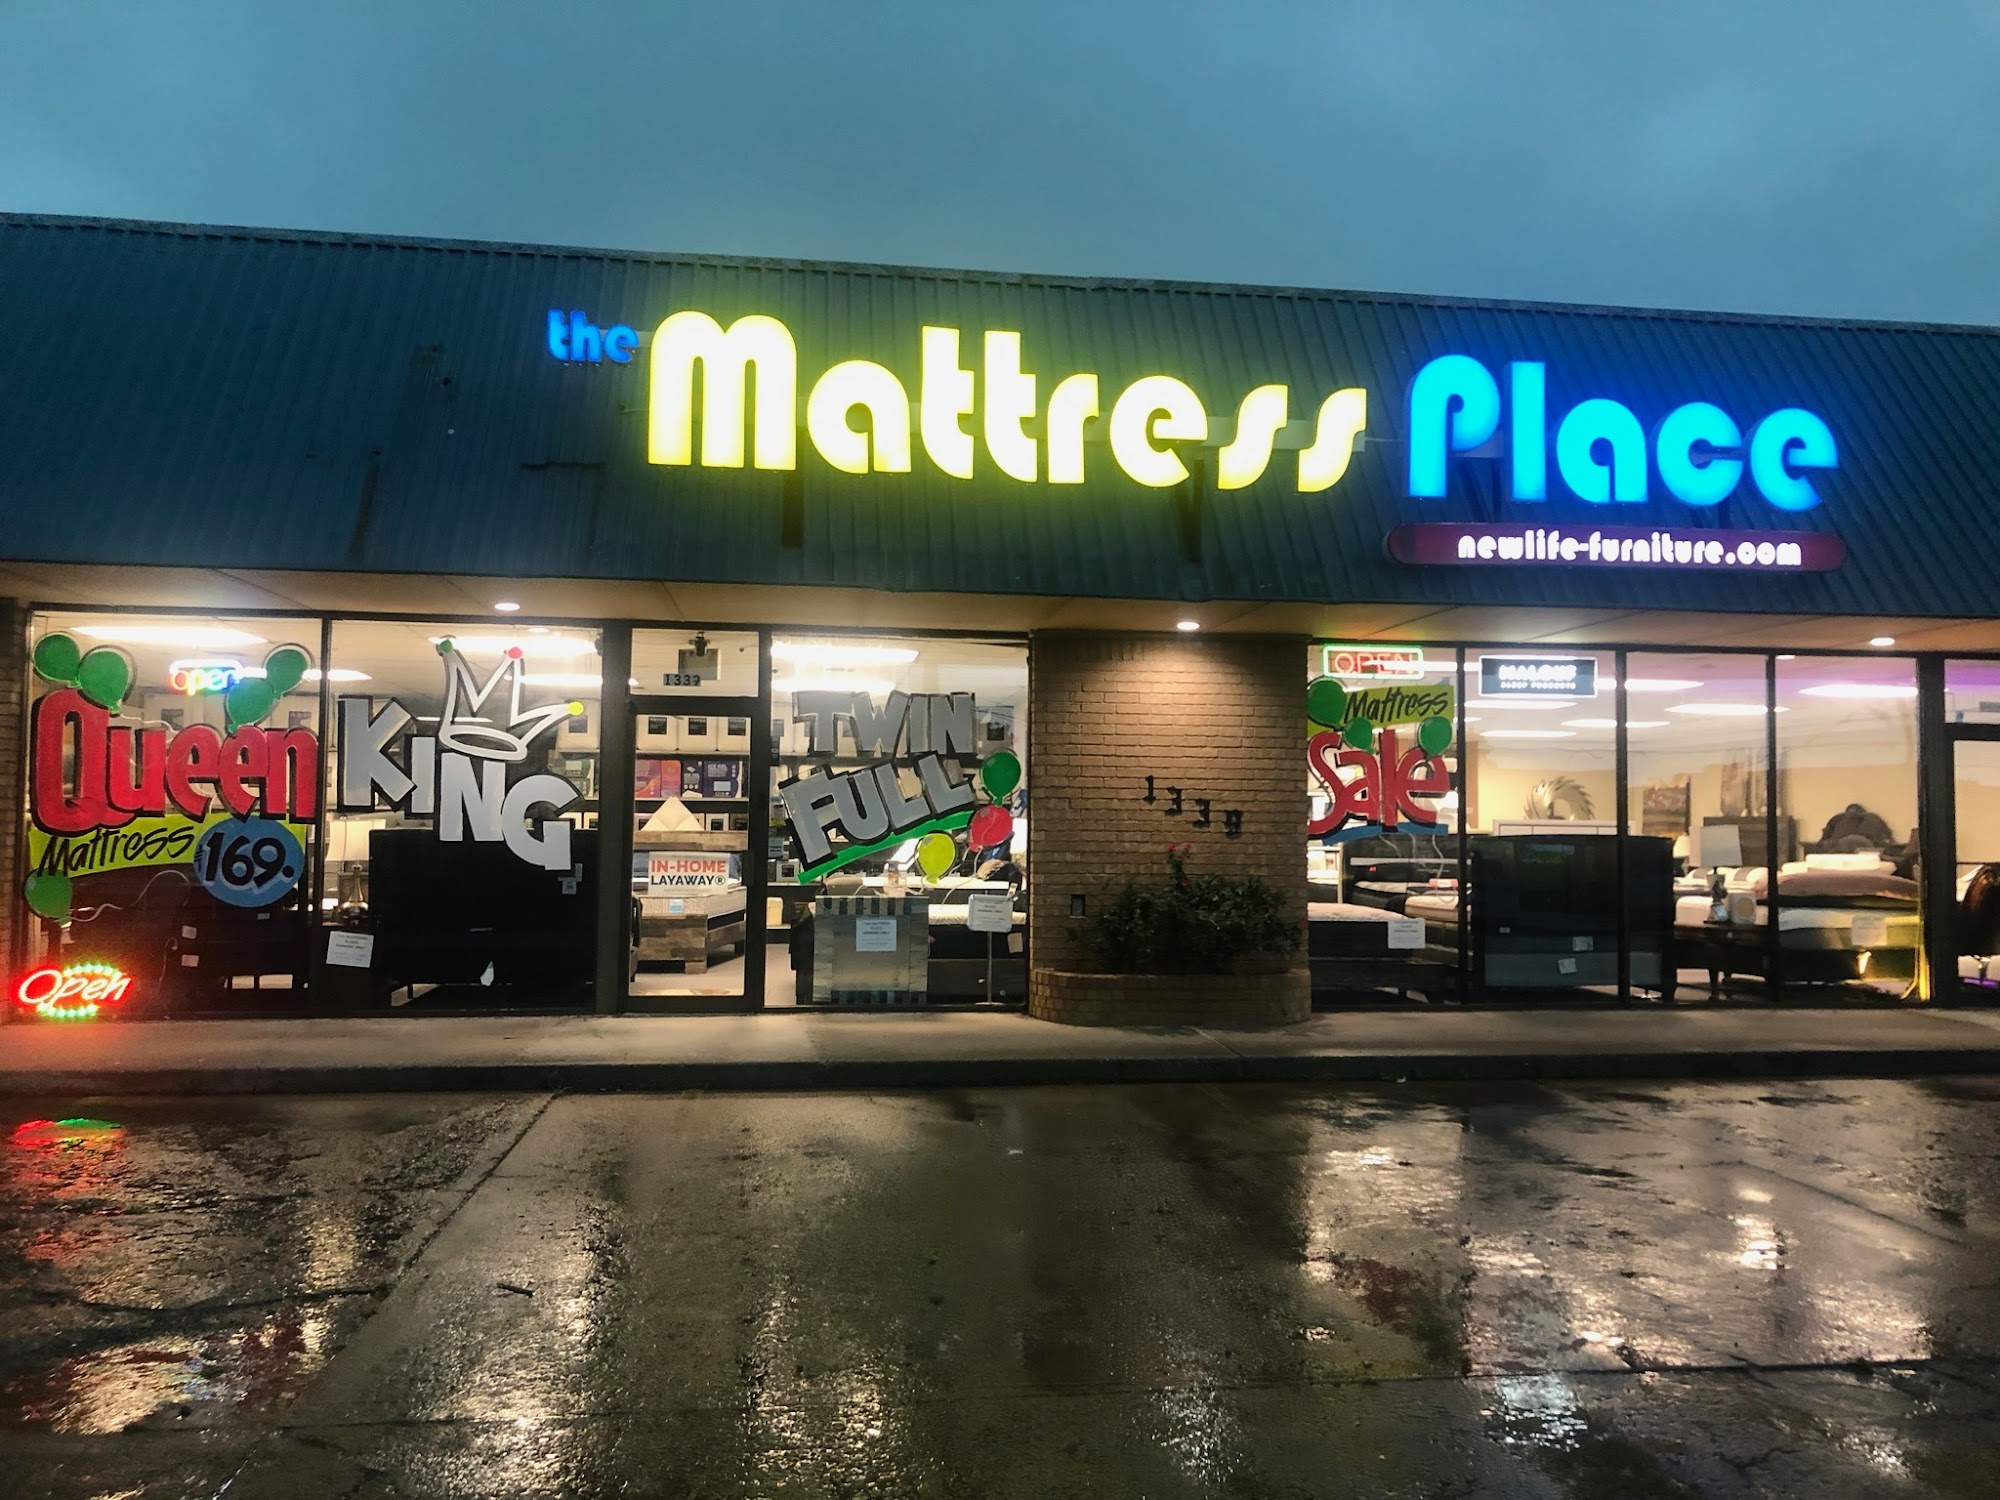 The Mattress Place